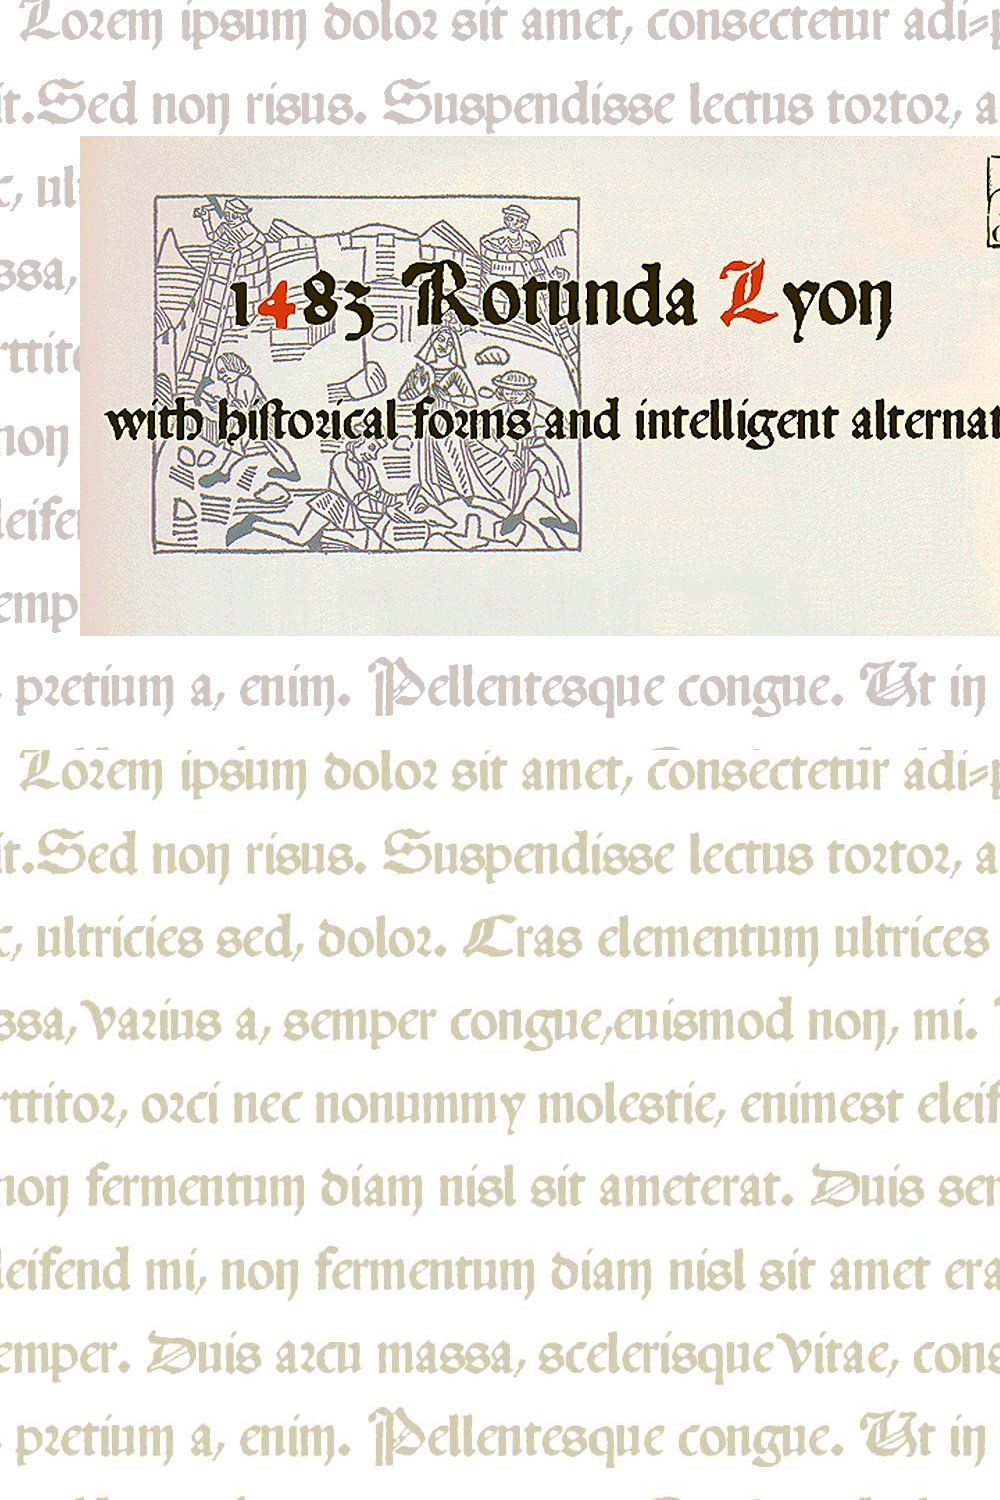 1483 Rotunda Lyon OTF pinterest preview image.